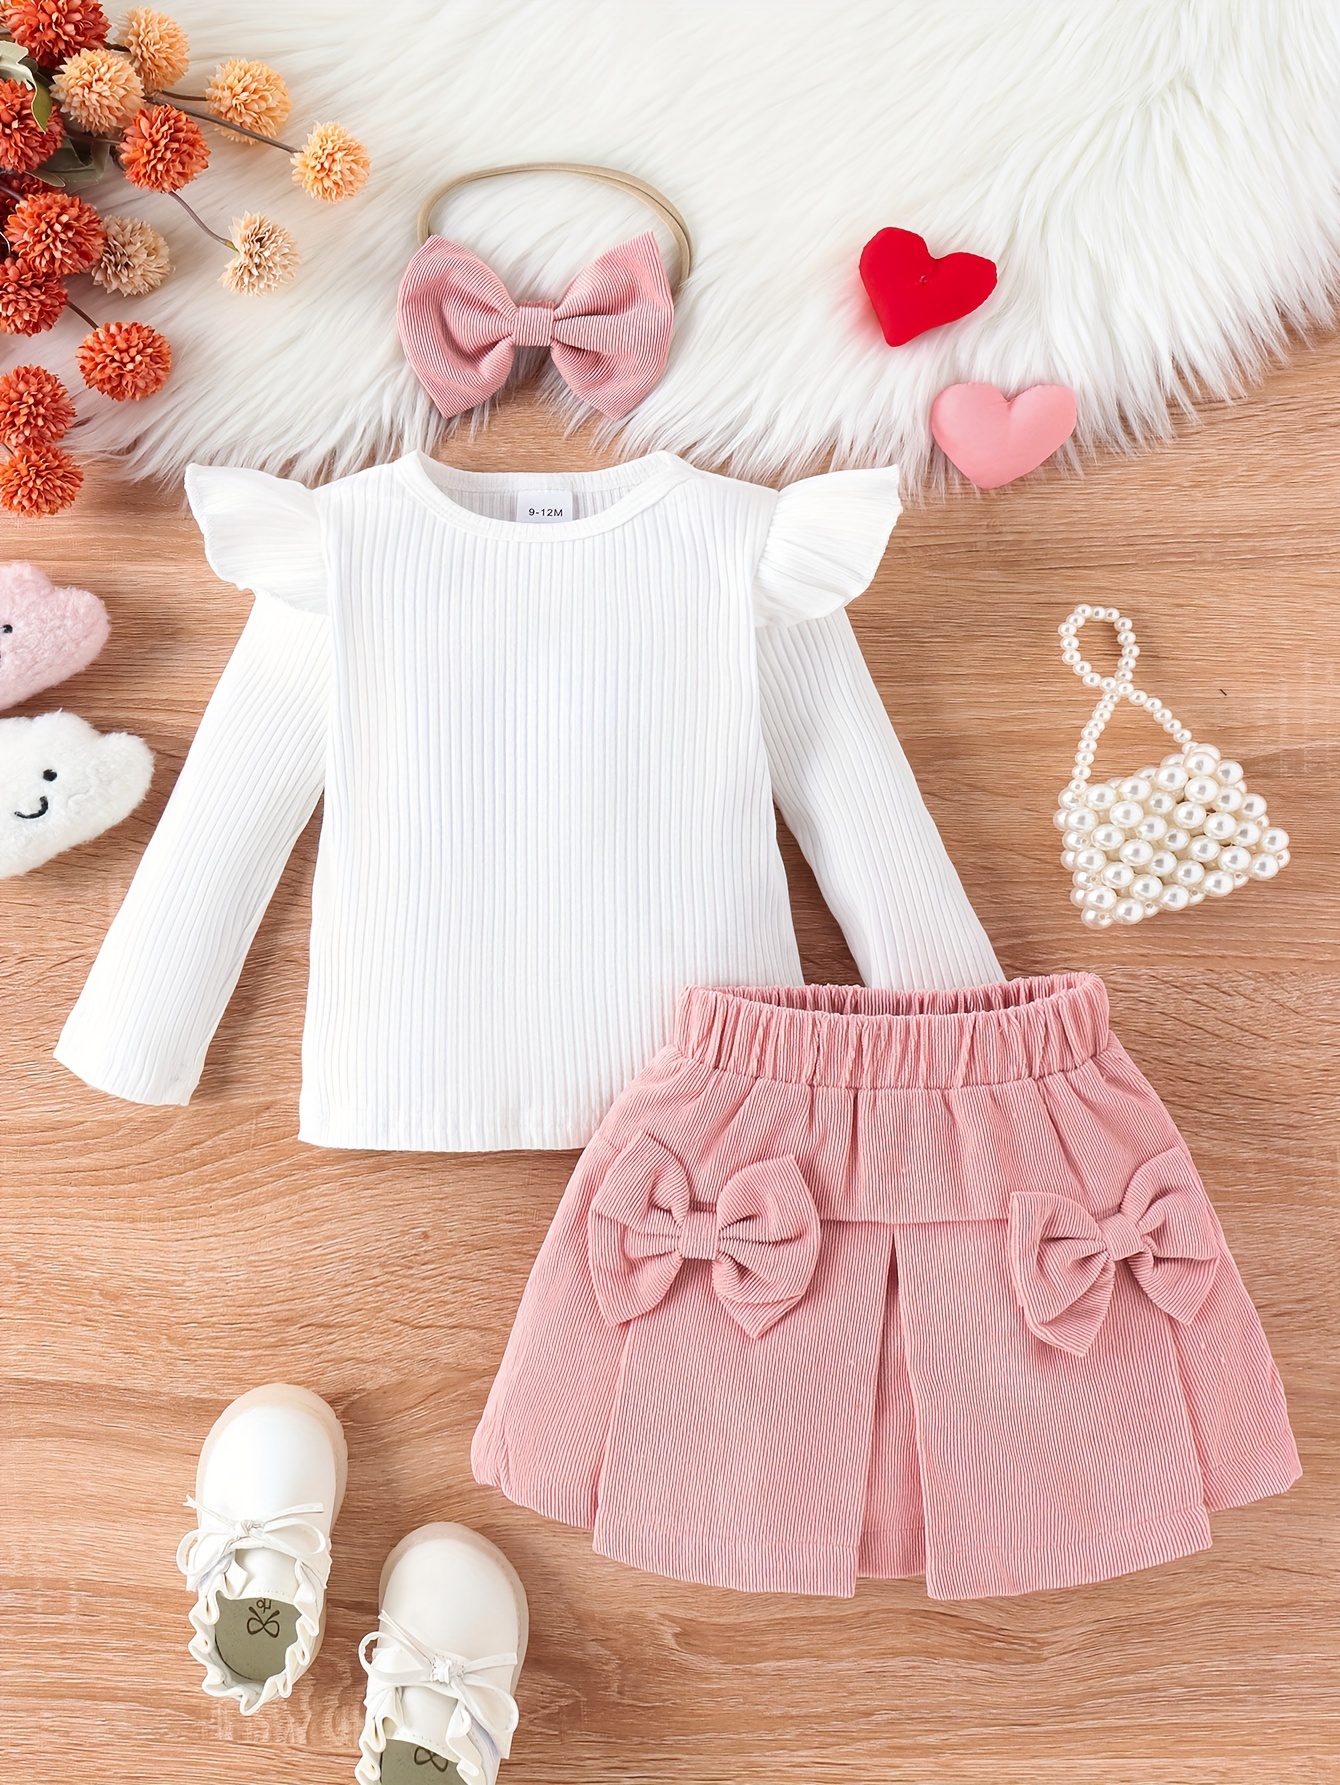 Tiny Bunnies Baby Girls Dress Cotton Clothes Top Shorts Set 1 To 4